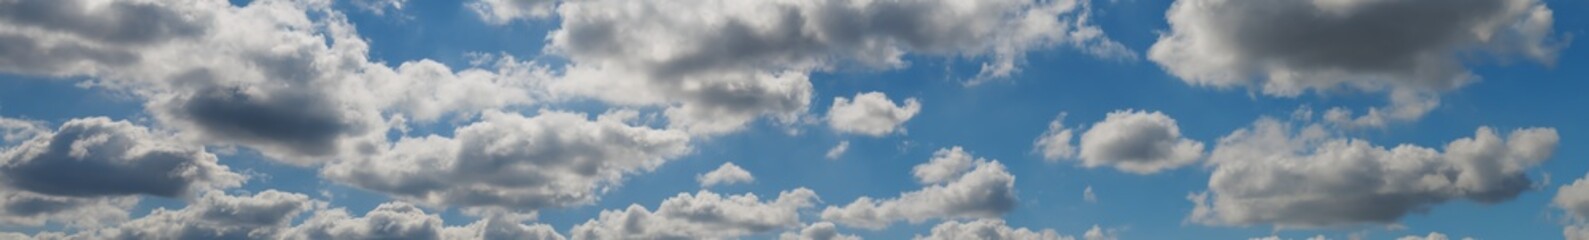 white and gray clouds in the blue sky, layered rain clouds, stratocumulus, cumulonimbus,...